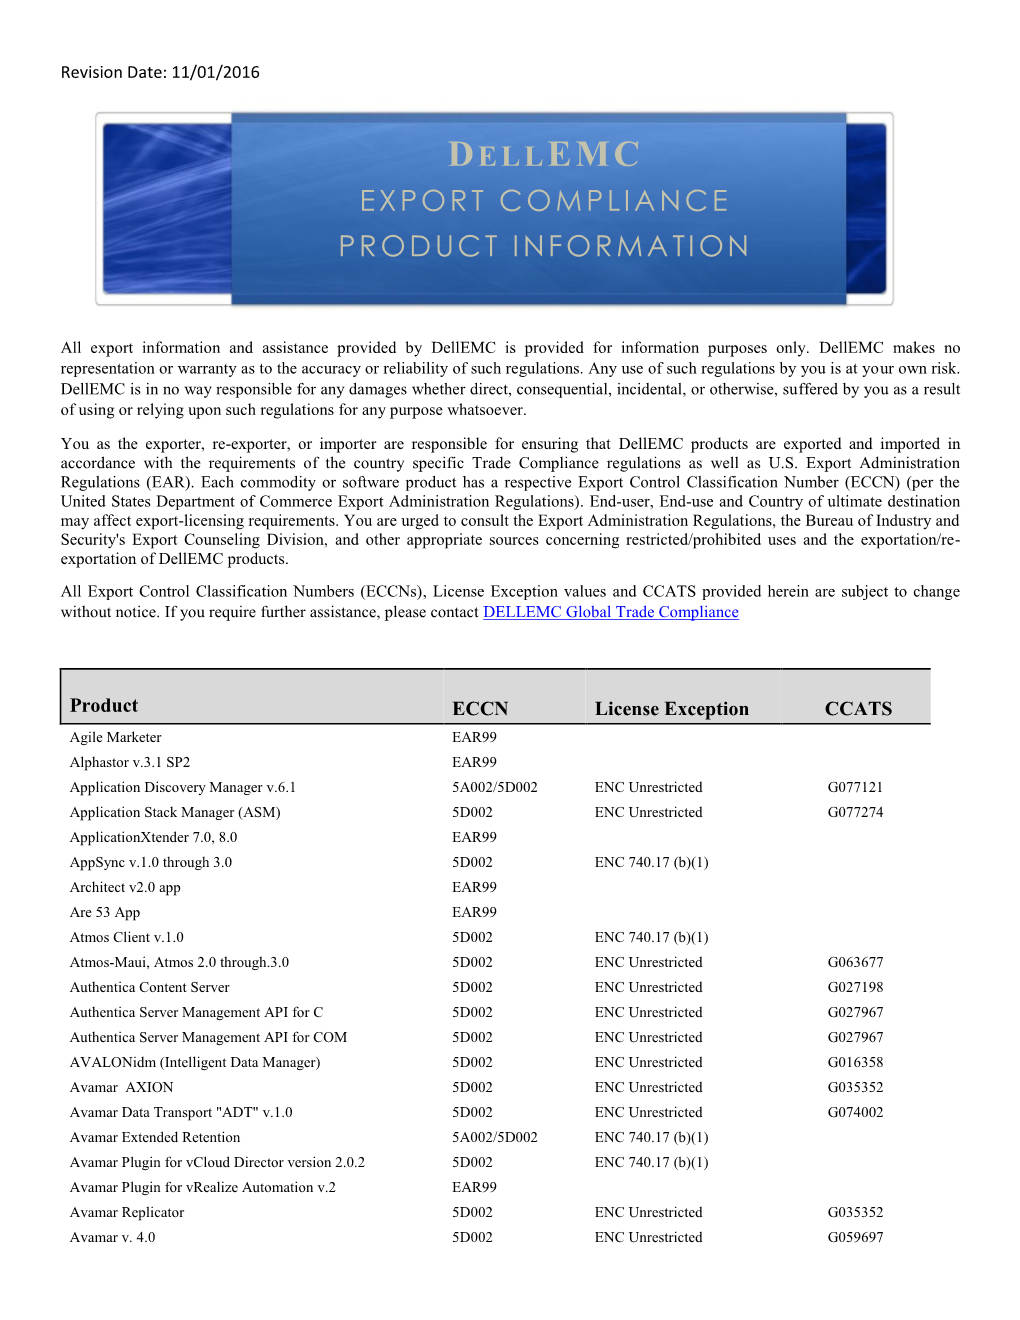 Dellemc Export Compliance Product Information